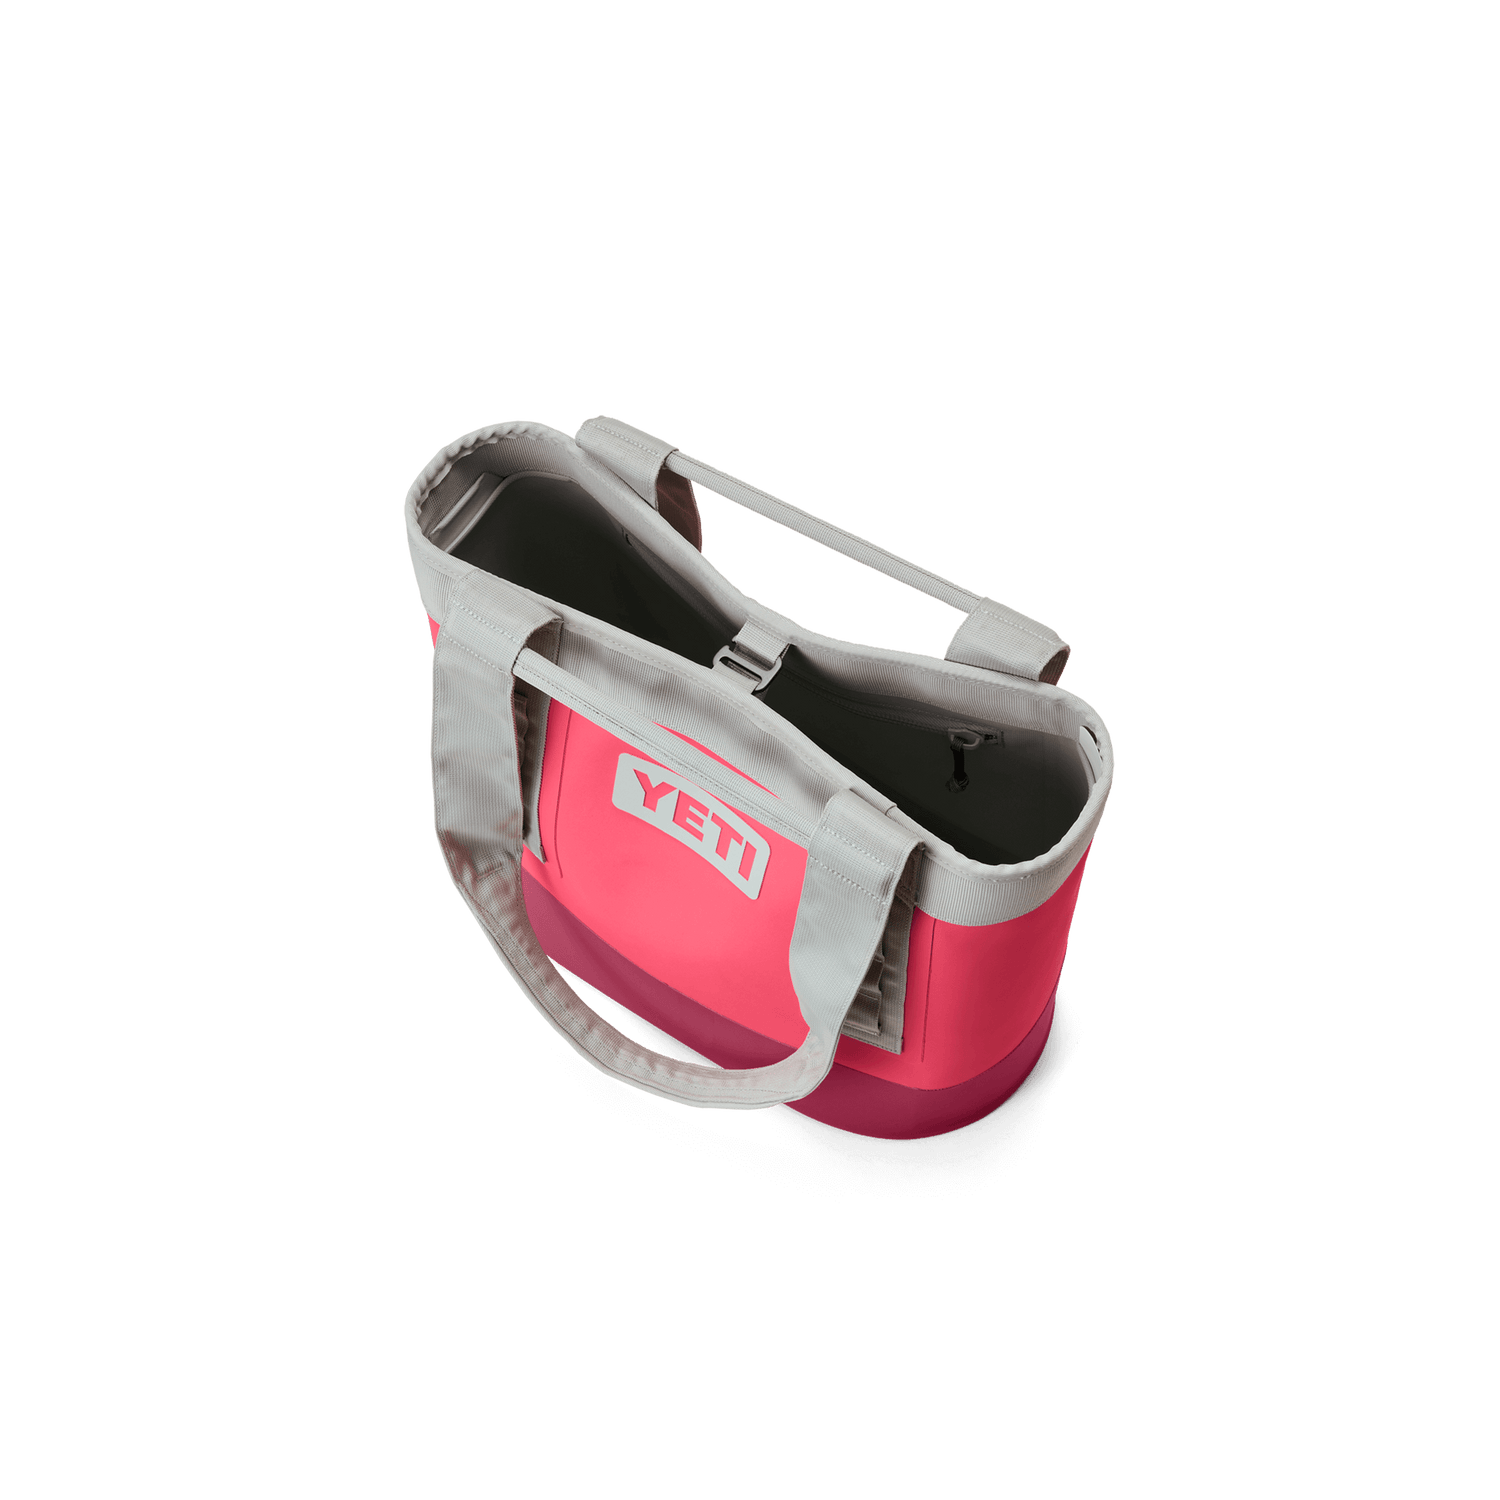 Yeti Camino Carryall 20, Bimini Pink - Carr Hardware